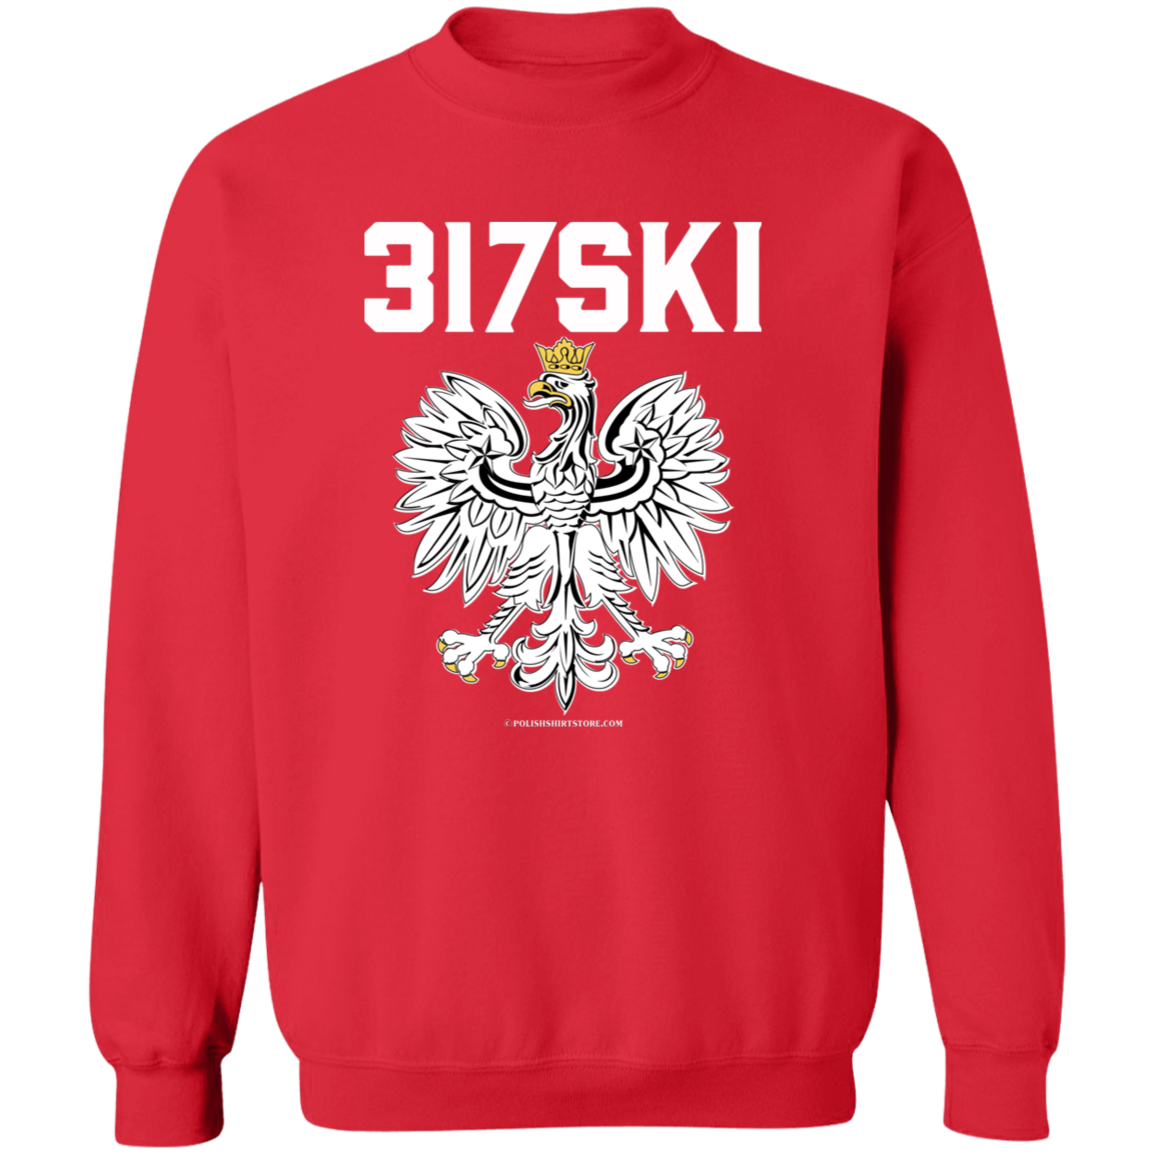 317SKI Apparel CustomCat G180 Crewneck Pullover Sweatshirt Red S